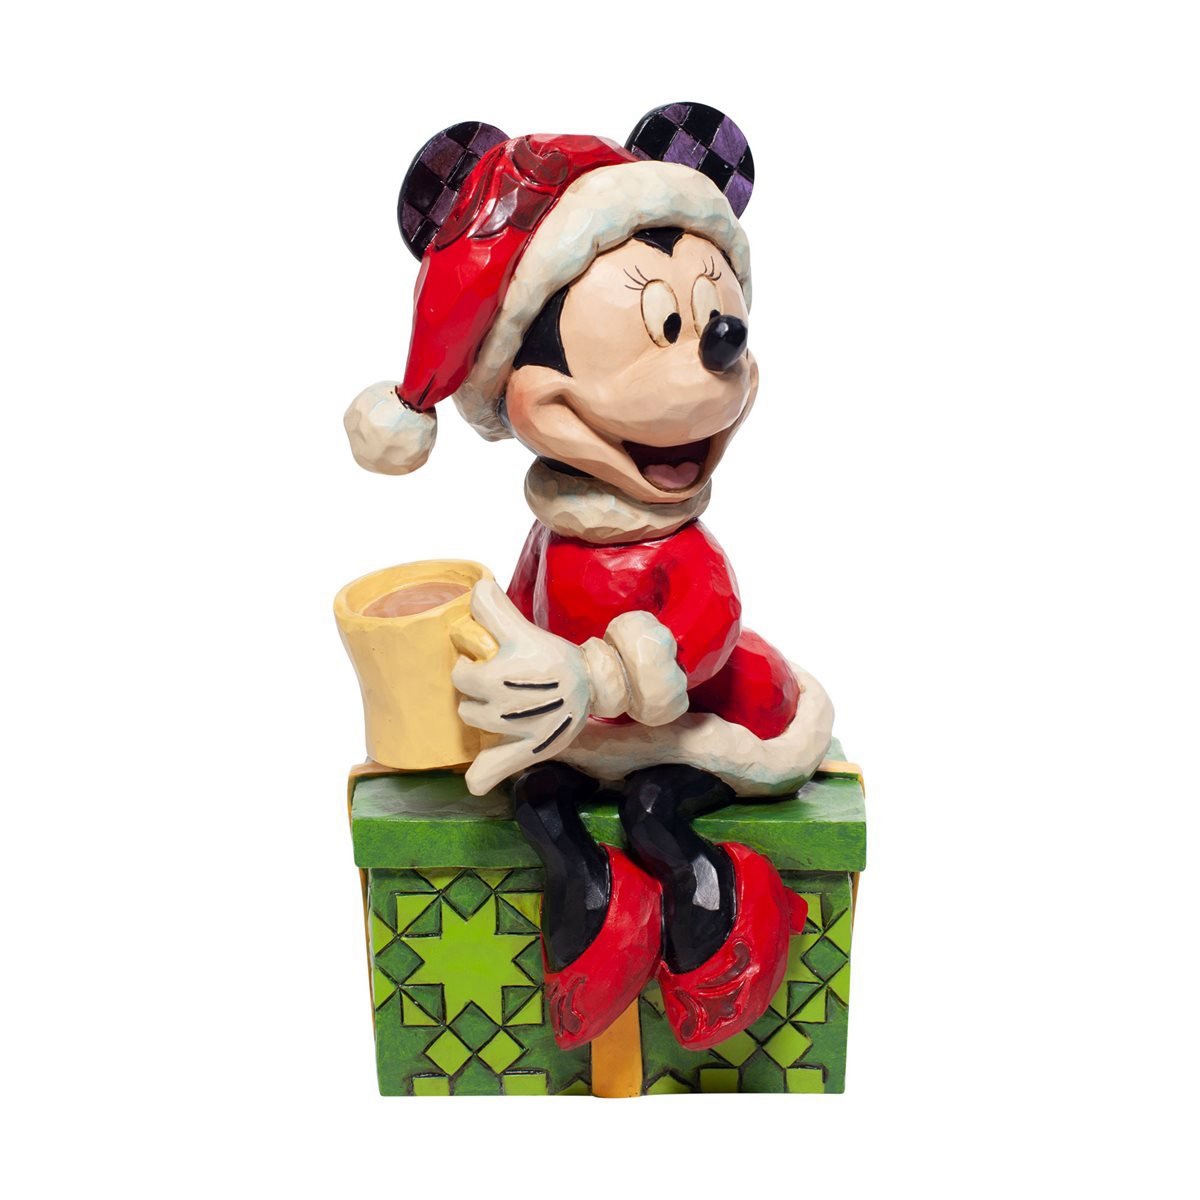 Mickey mouse cartoon sculpture